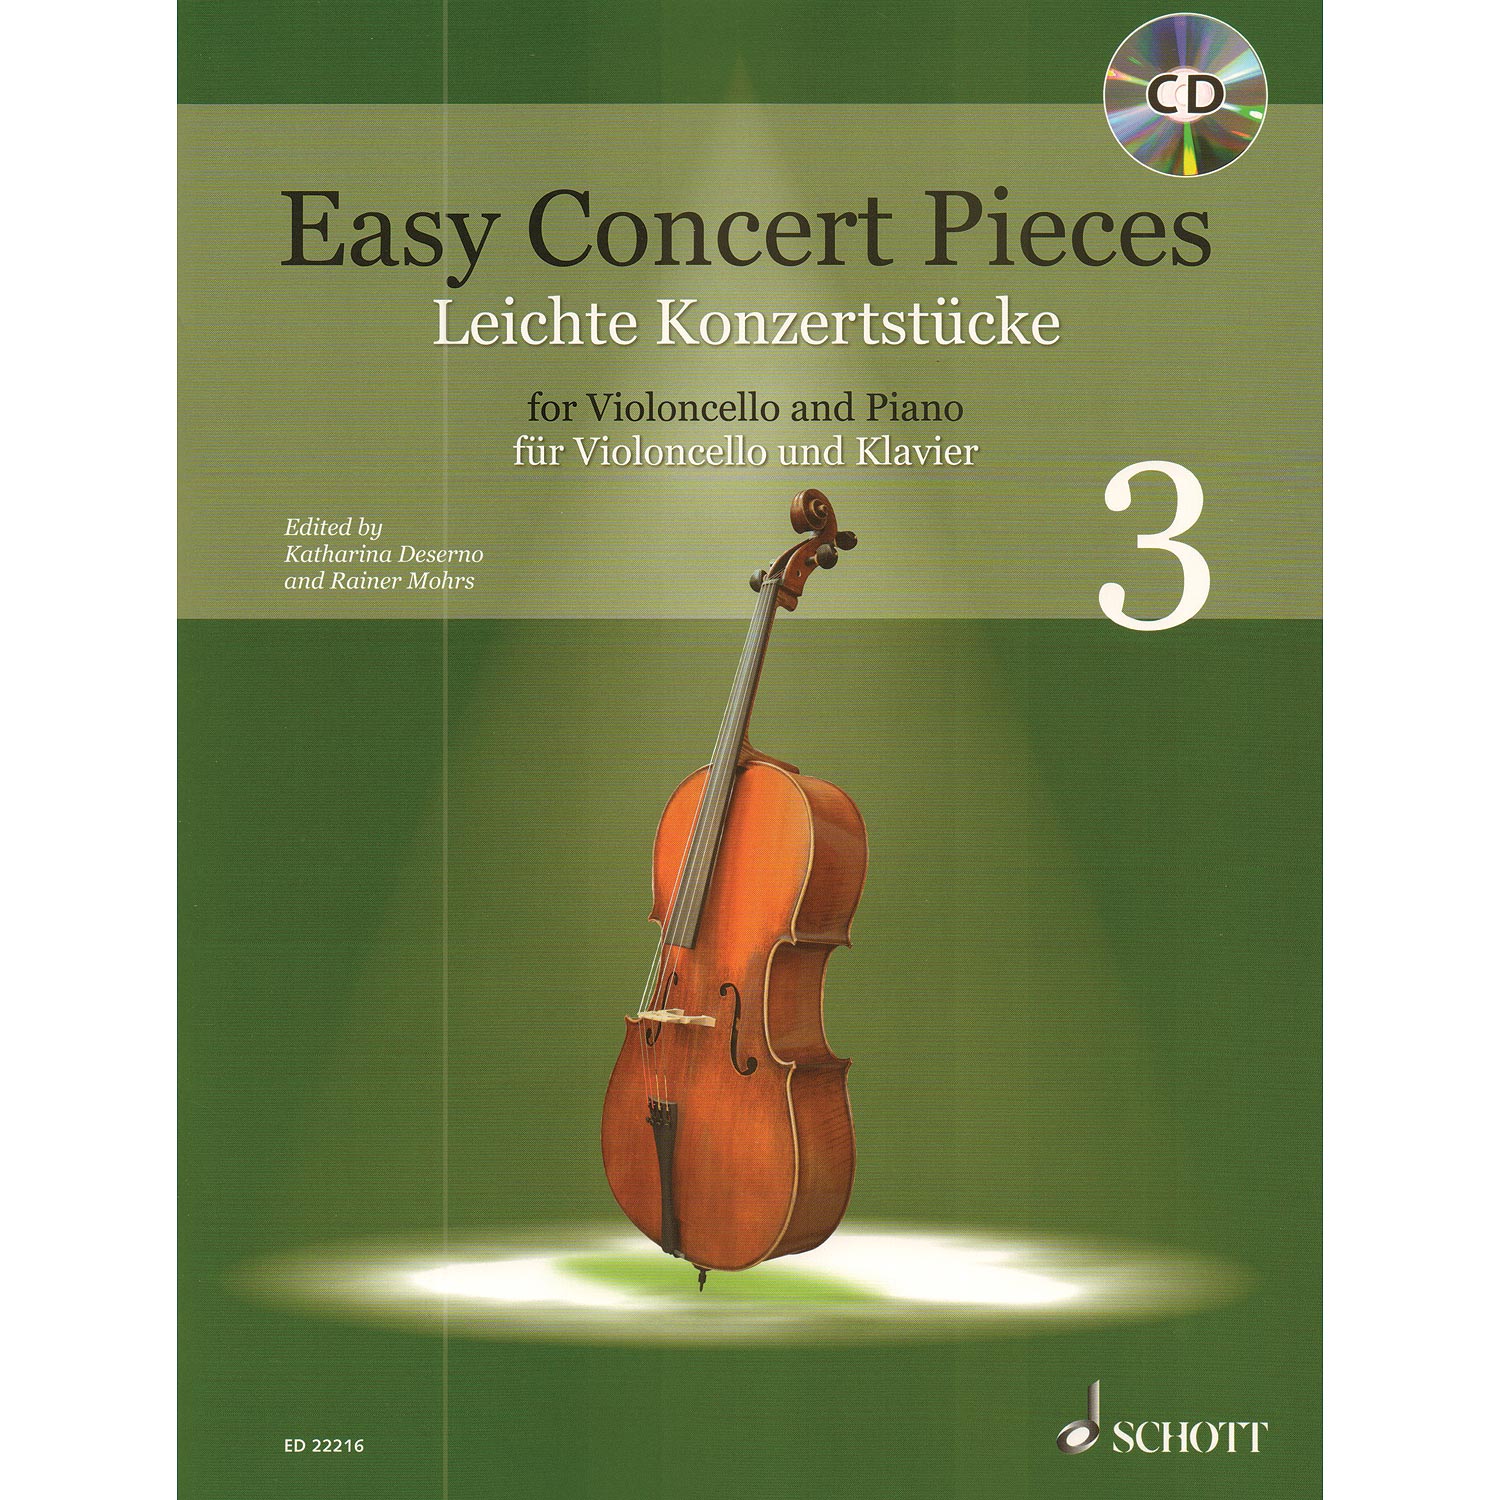 Easy Concert Pieces for cello and piano, book 3; Various (Schott